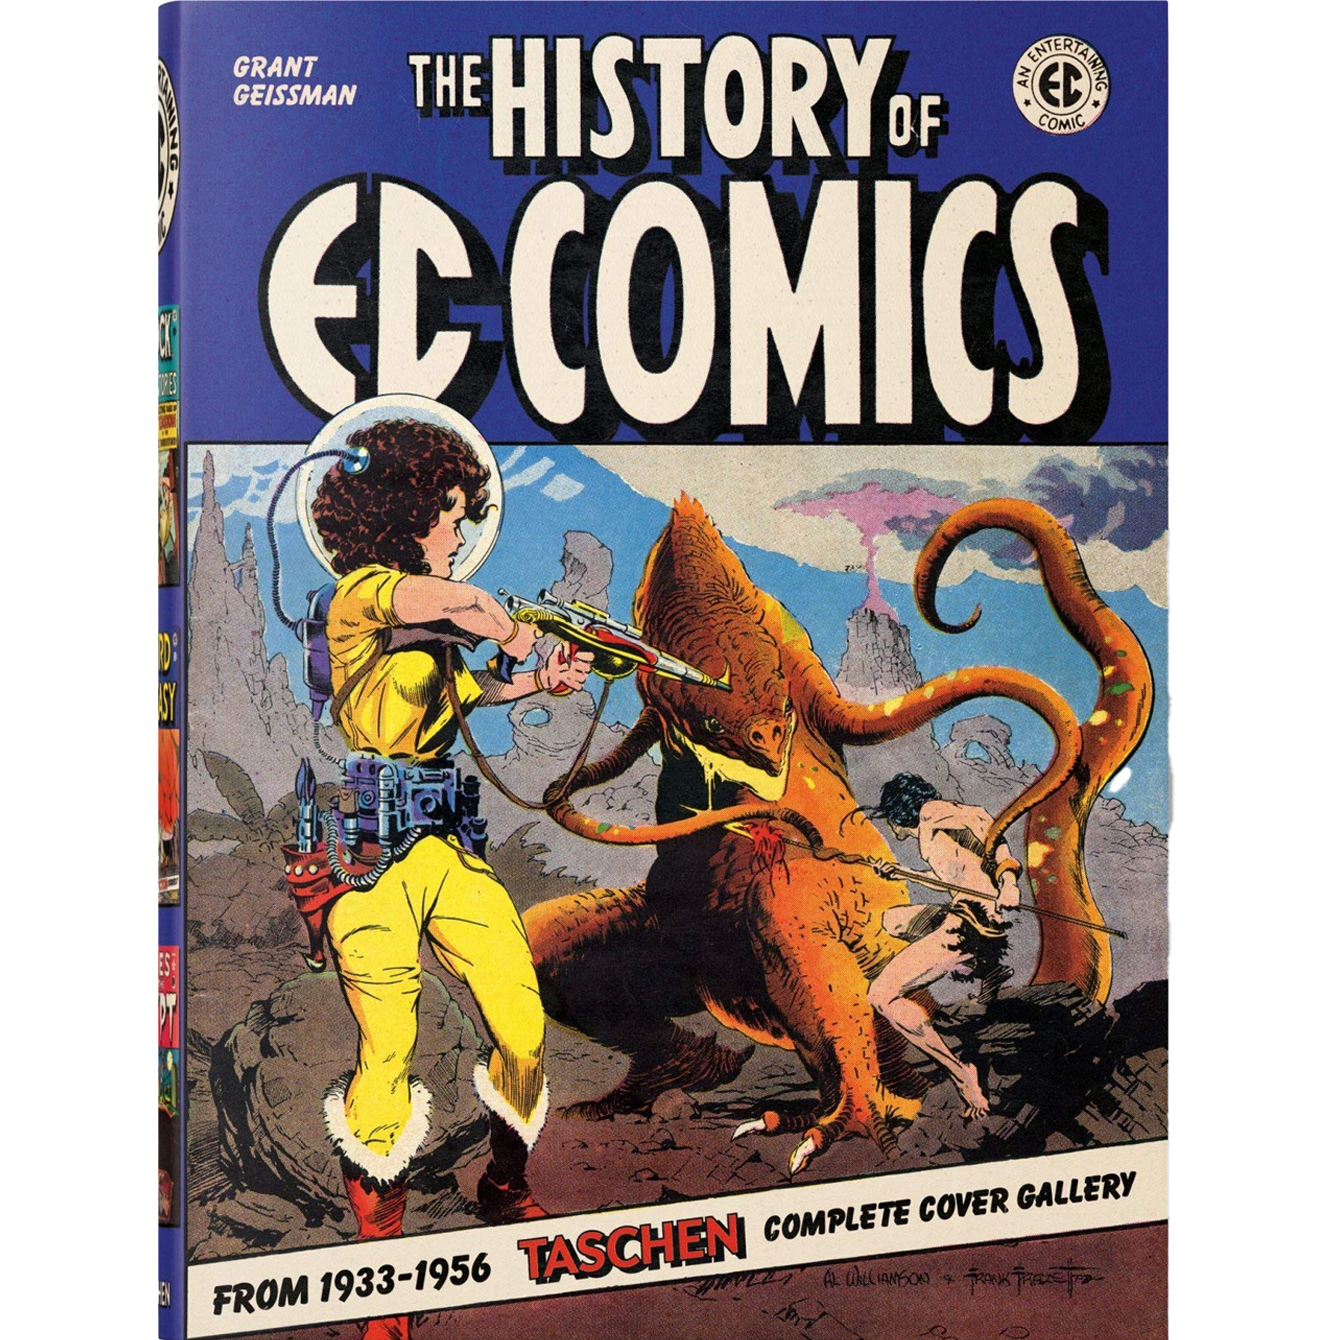 History of EC Comics HC (2020 Taschen) From 1933-1956 comic books NIB (light wear)